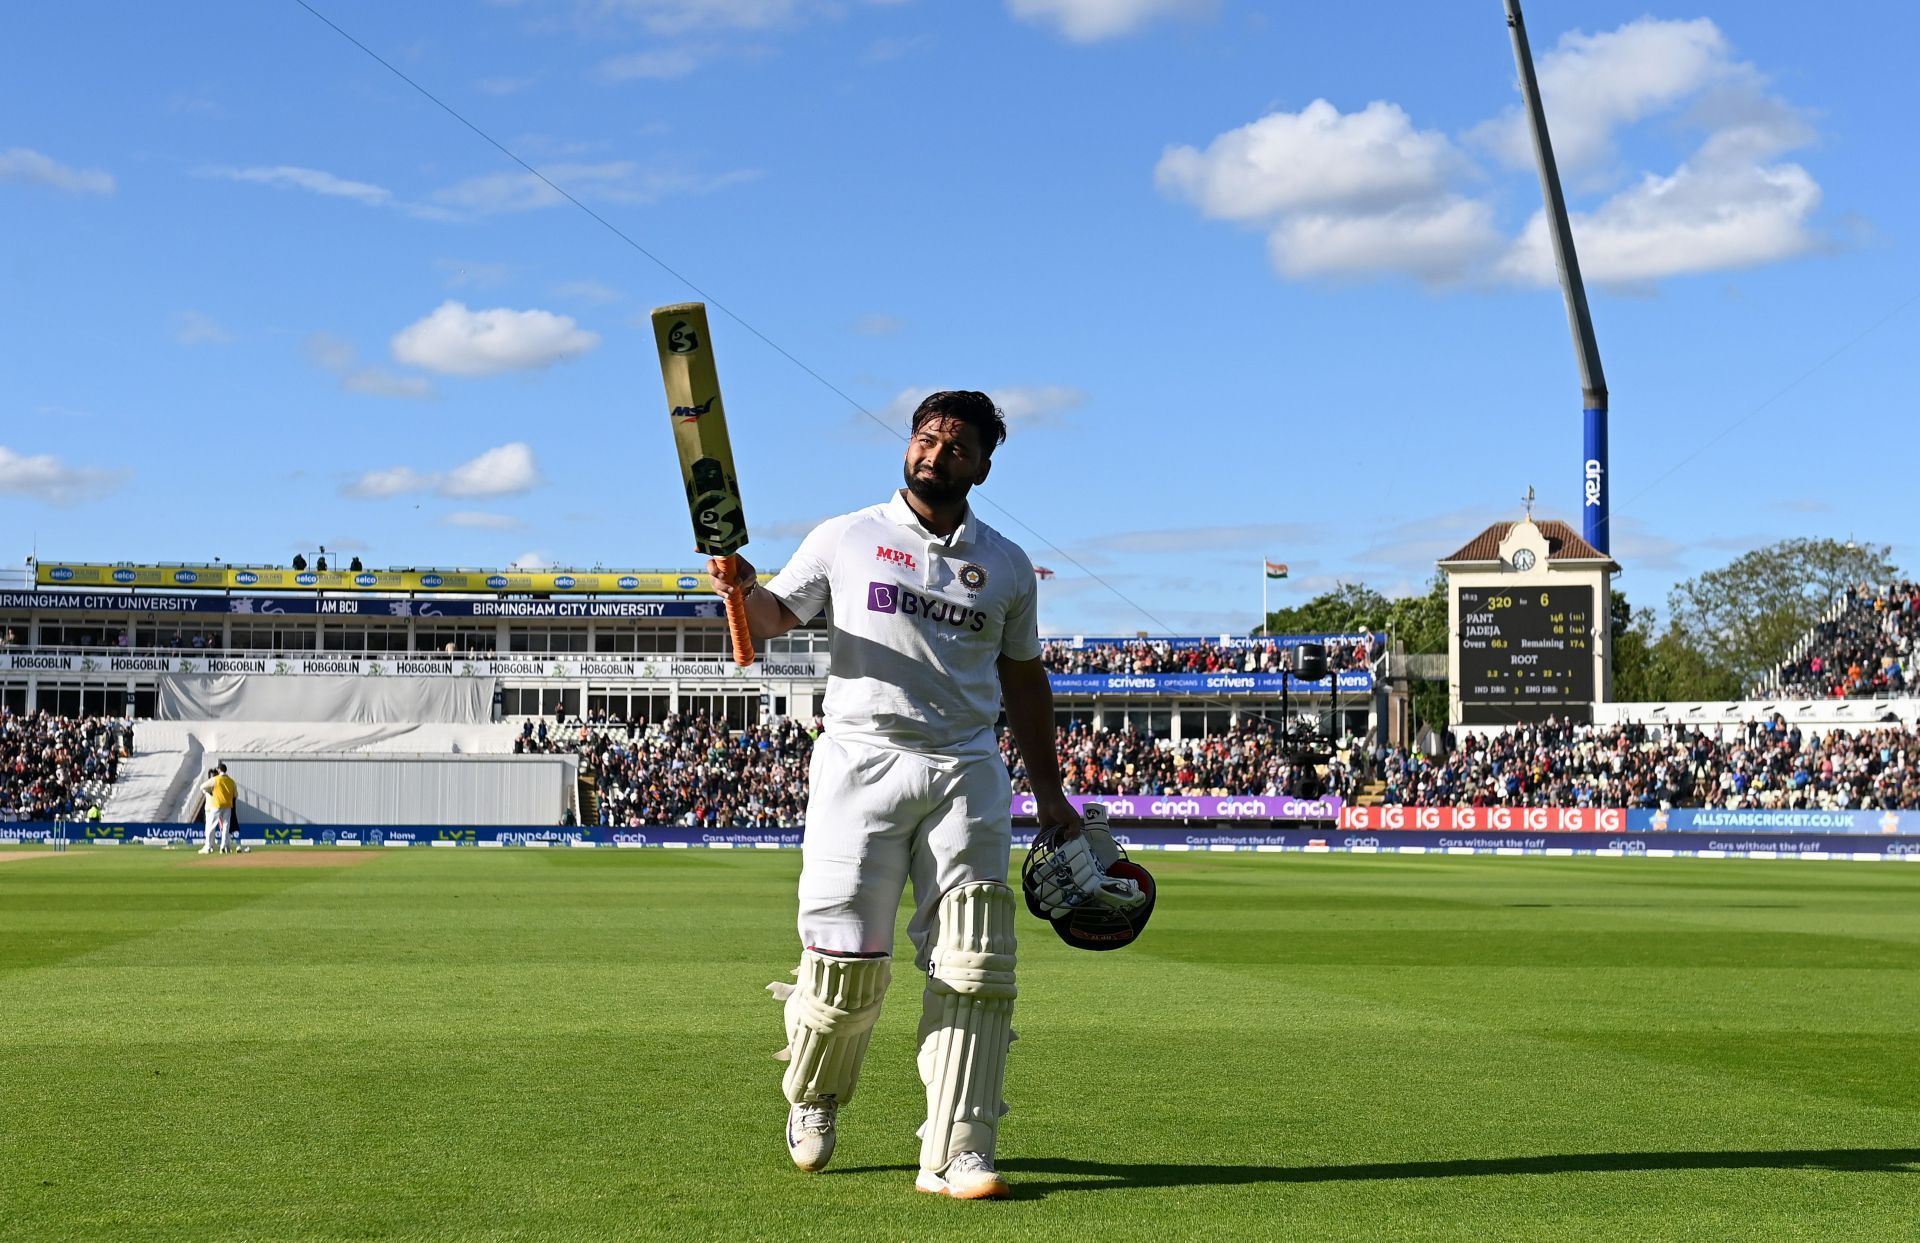 Rishabh Pant averages 87.50 batting at No. 5 in Tests